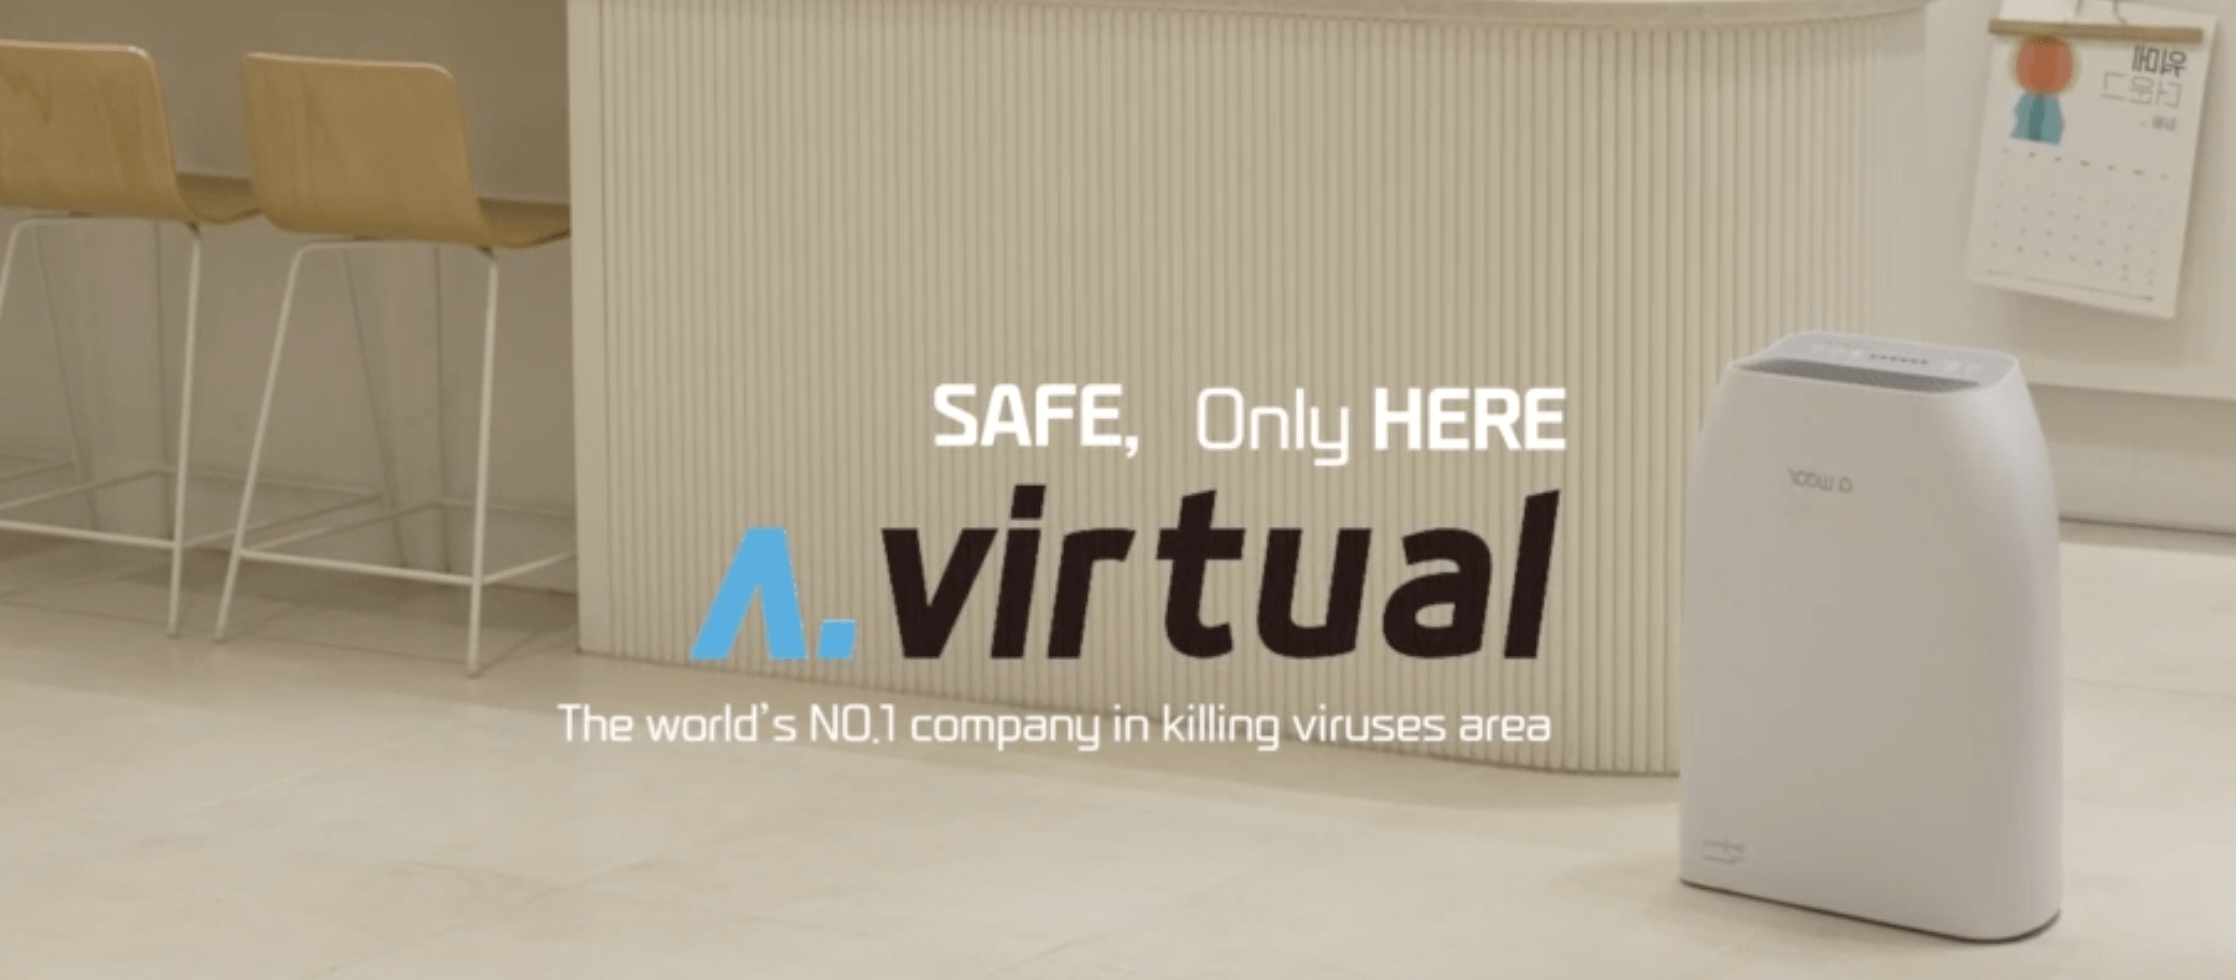 A-Virtual has “nano technology”